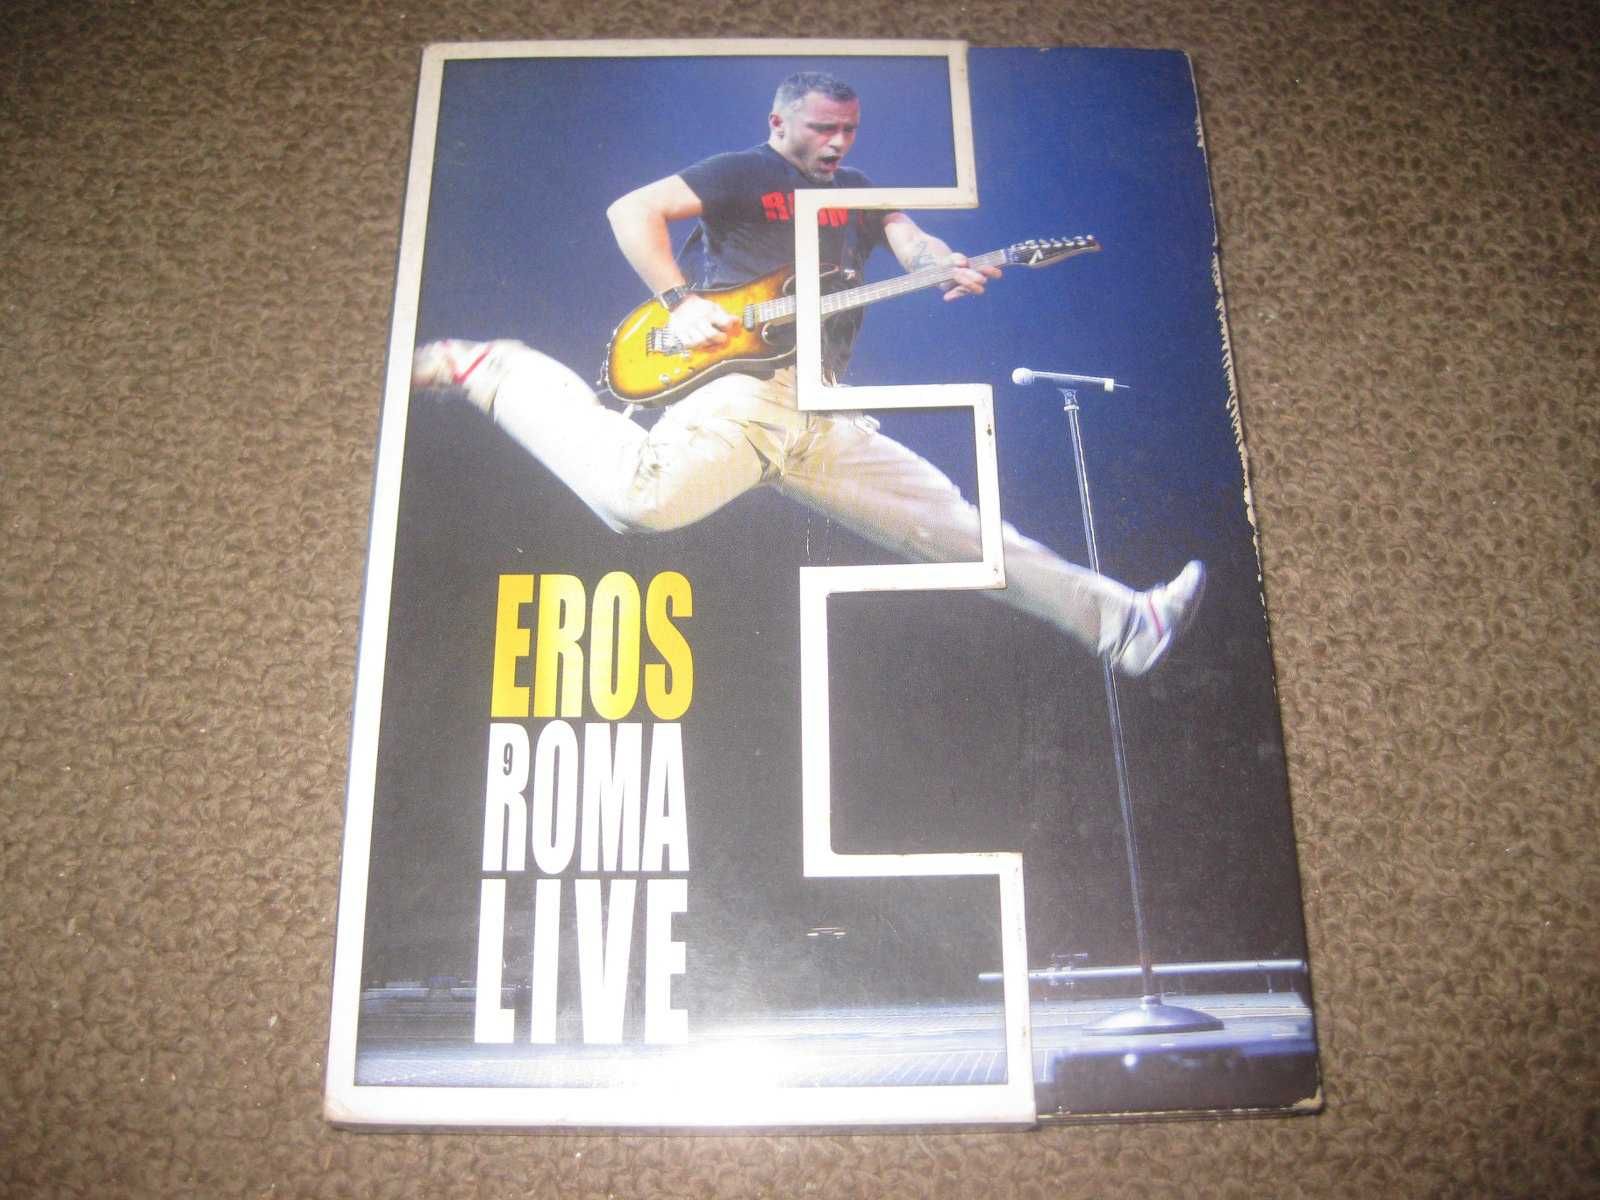 Eros Ramazzotti "Eros Roma Live" 2 DVDs/Digipack